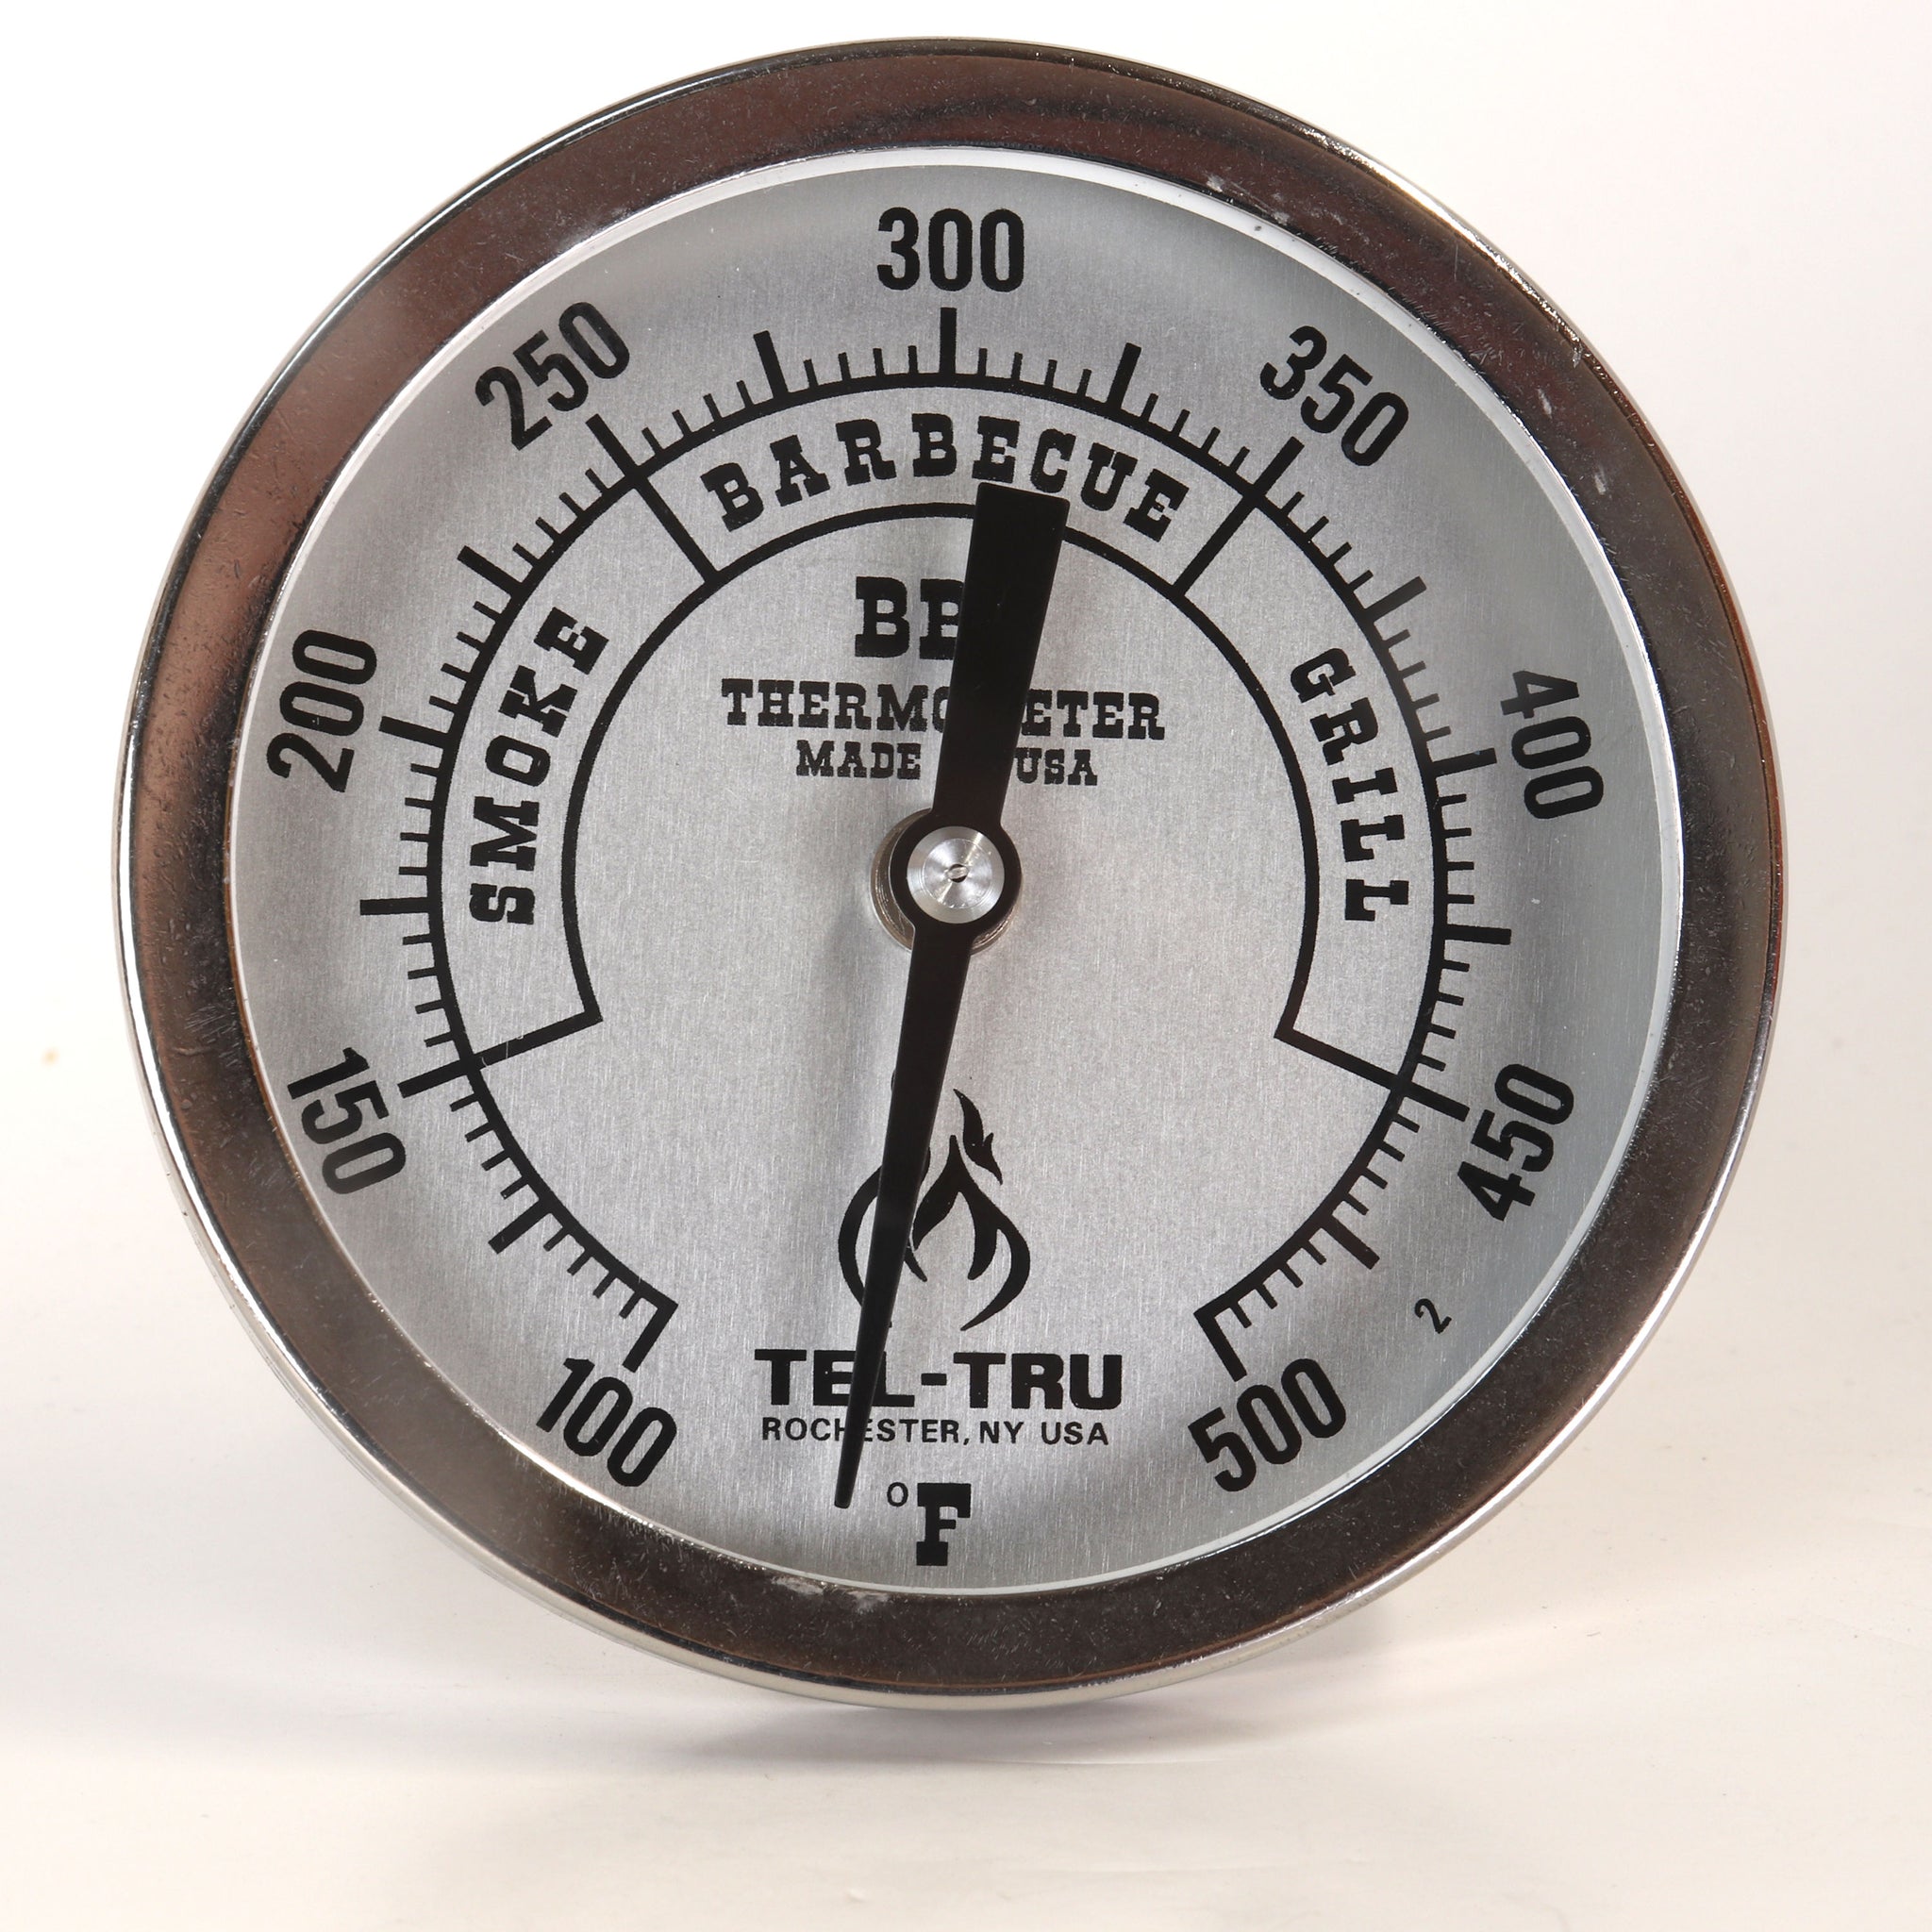 Tel-Tru BQ300 Barbecue Grill Thermometer Review